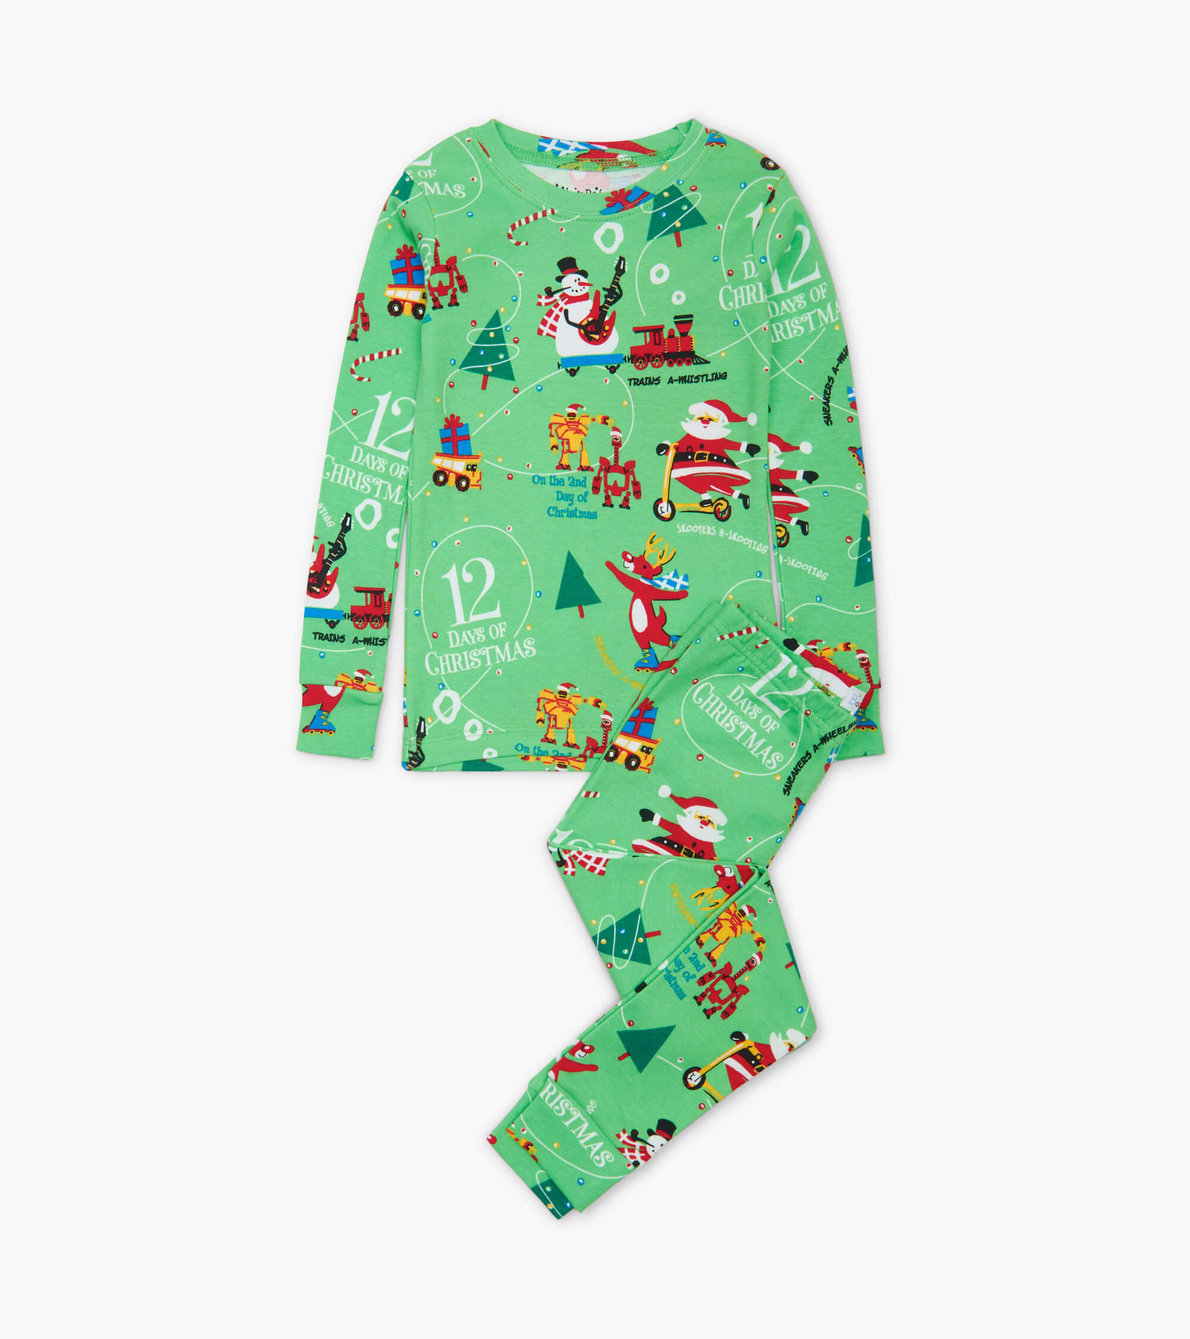 View larger image of 12 Days of Christmas Green Pajama Set